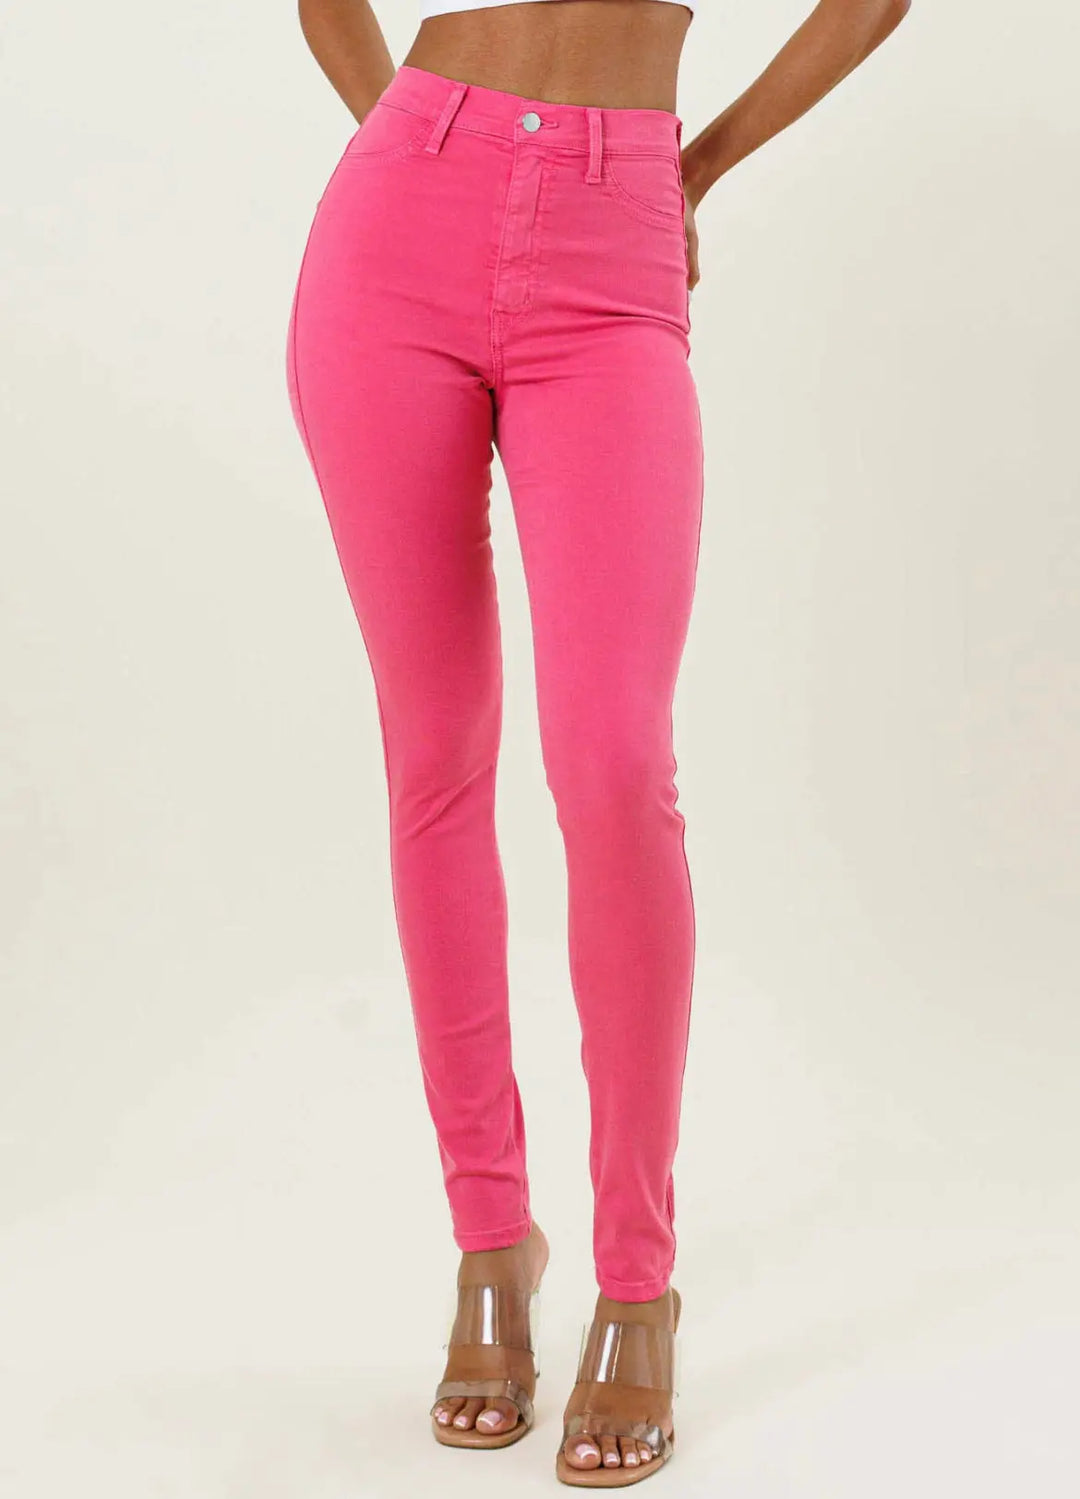 Pretty & Pink Jeans